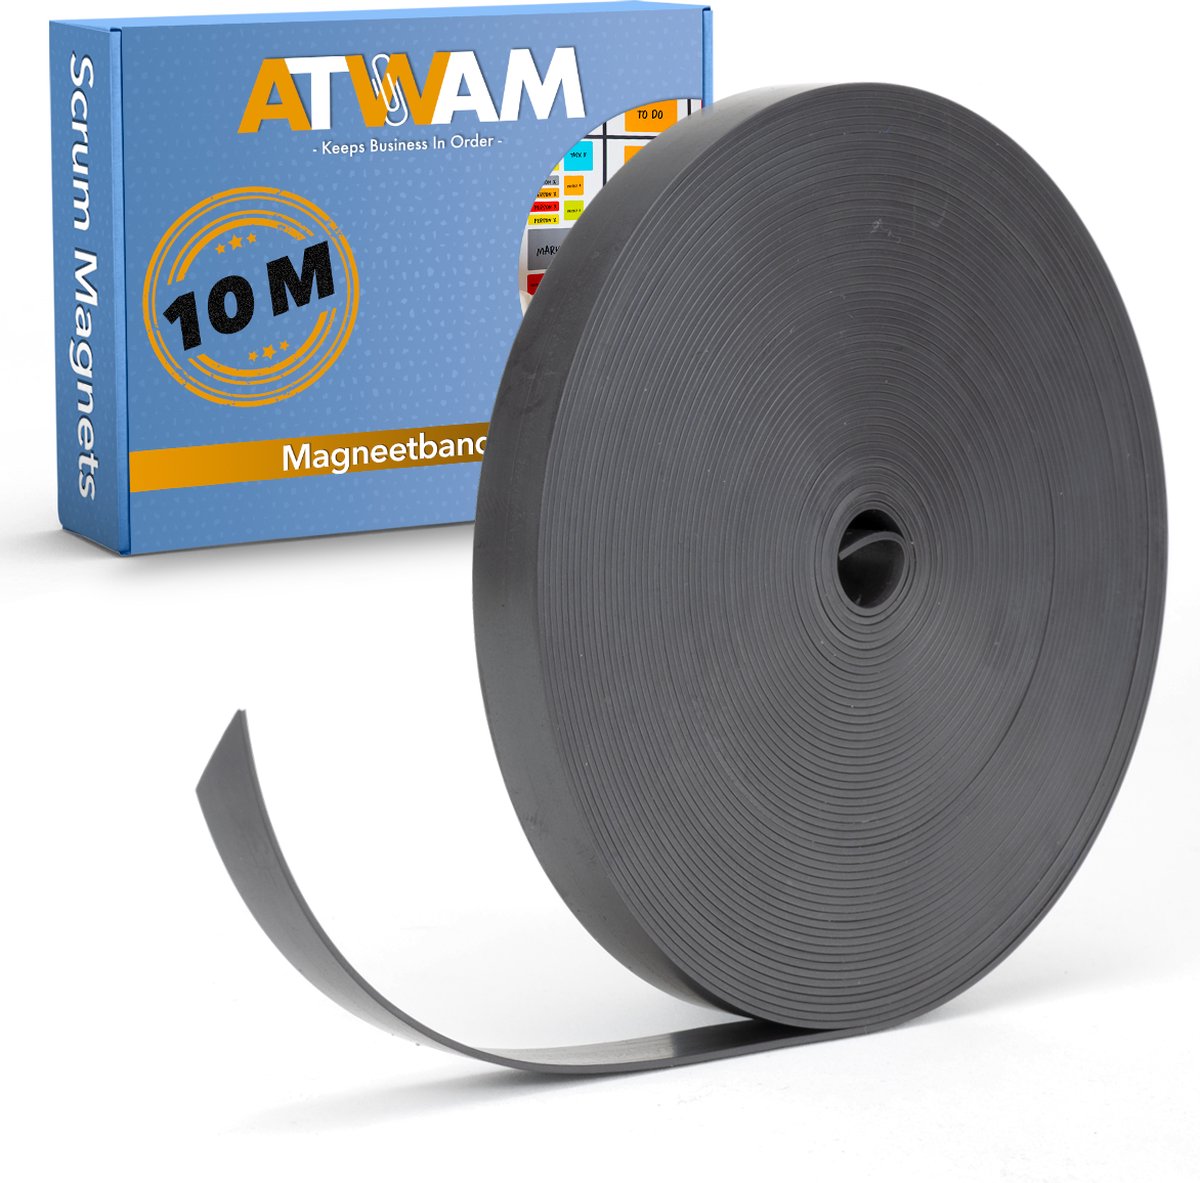 ATWAM Magneetstrip 10 Meter Lang - Magneetband - Magneetband Whiteboard - Whiteboard Planner - Magneten - ATWAM